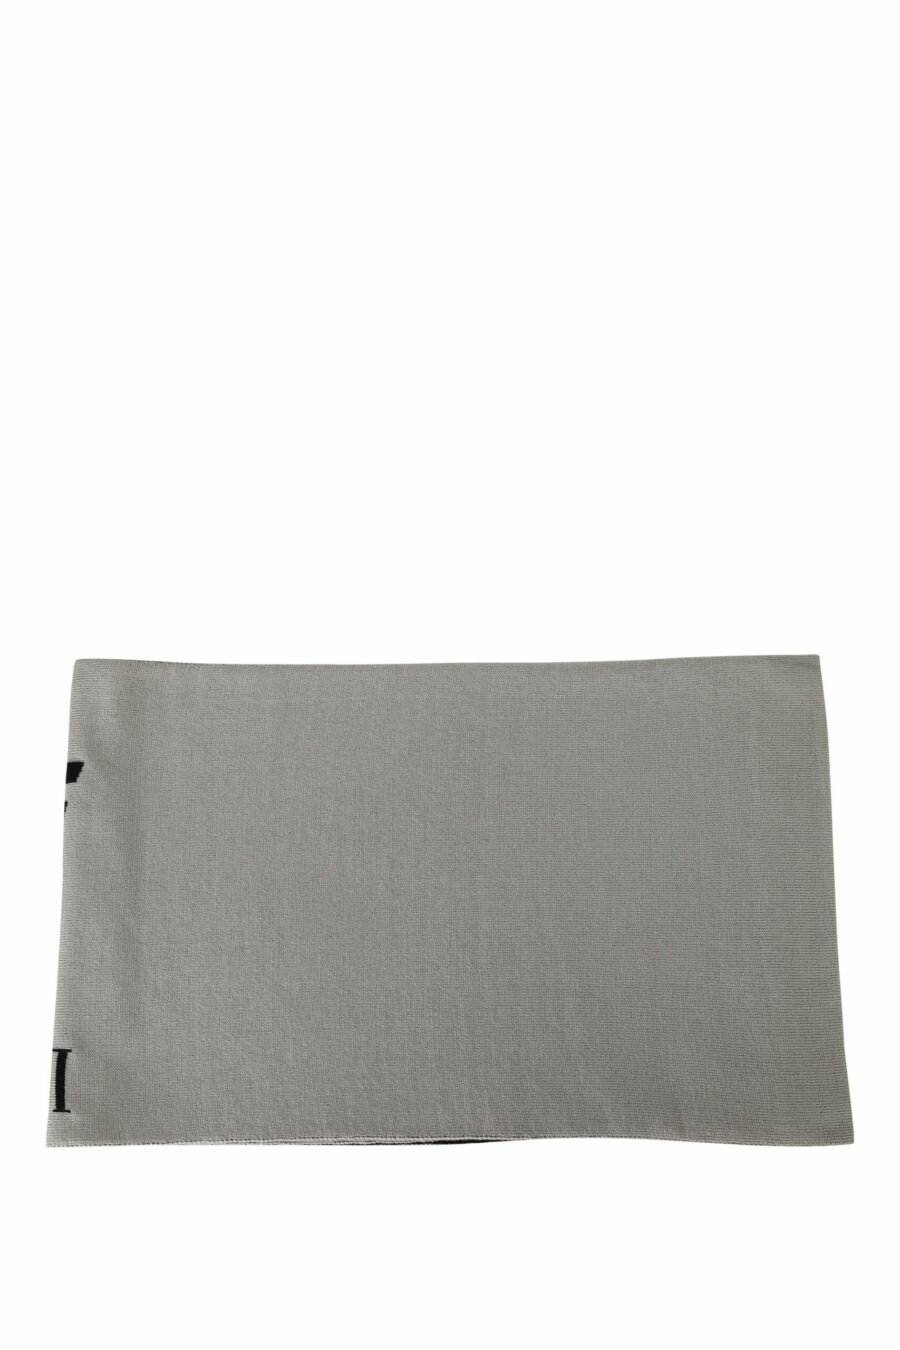 Bufanda gris claro con logo vertical "lux identity" blanco - 8056787823051 2 scaled